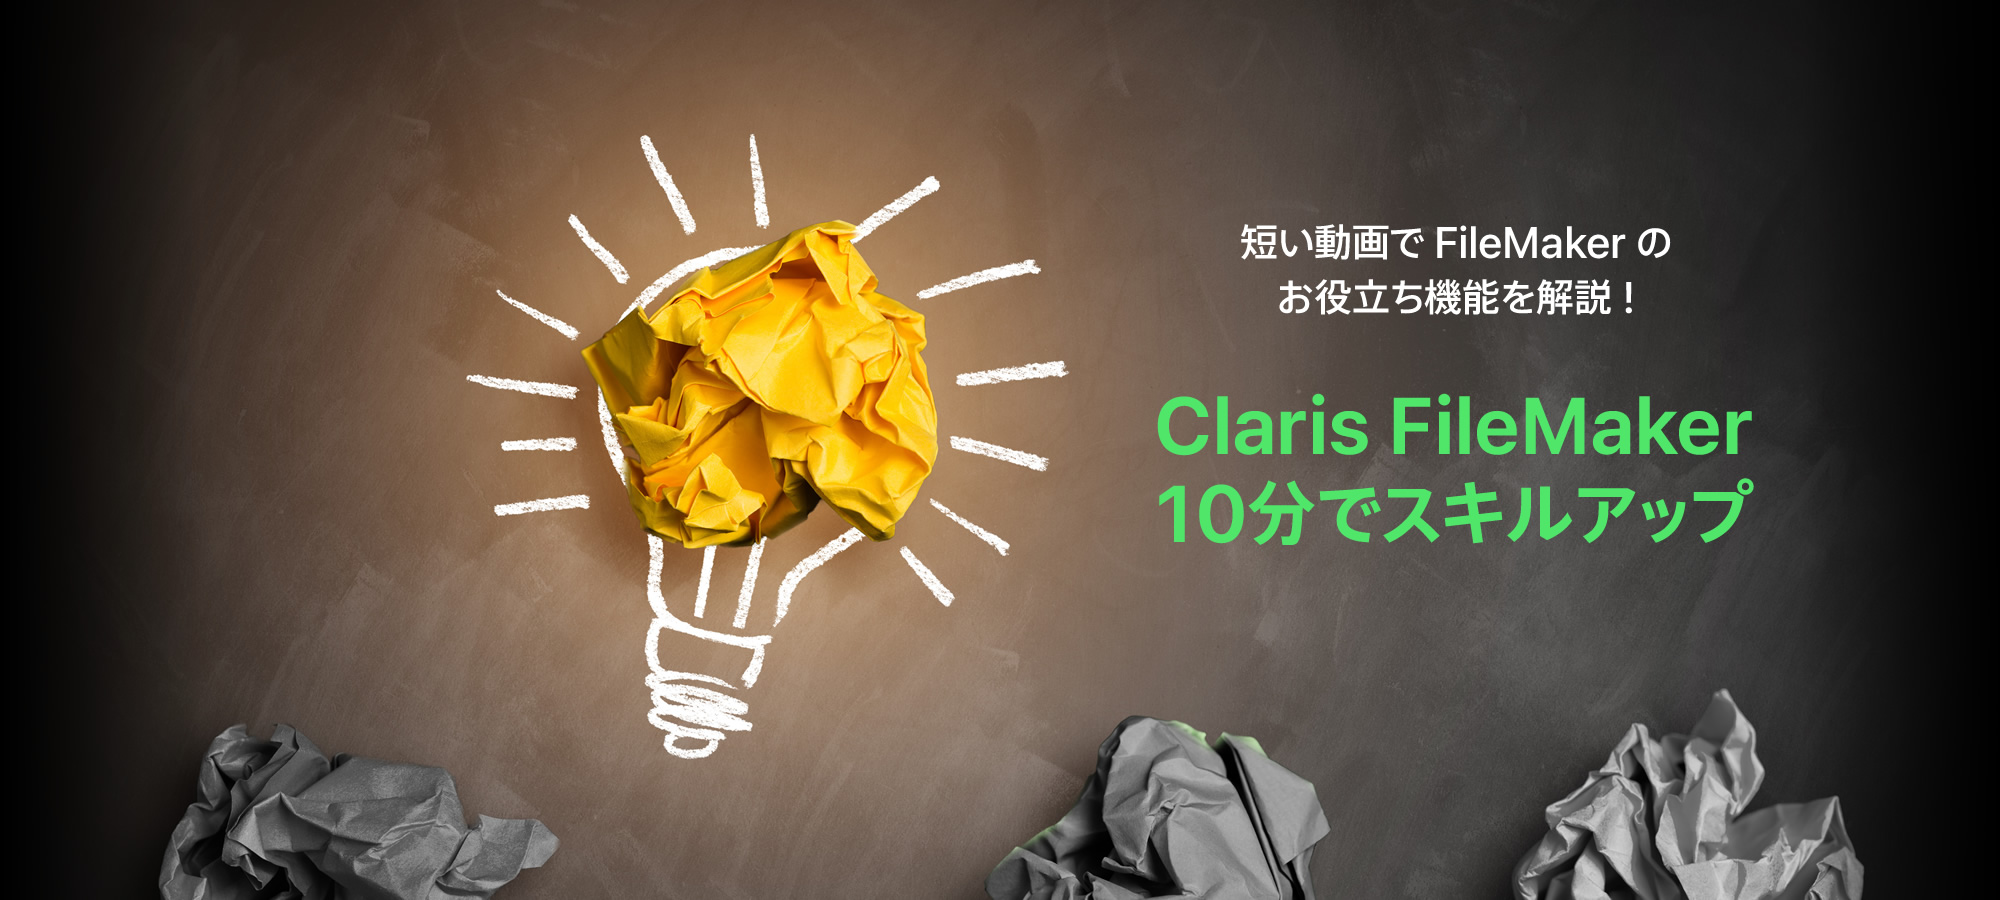 Claris FileMaker - 10分でスキルアップ - 短い動画で FileMaker のお役立ち機能を解説！